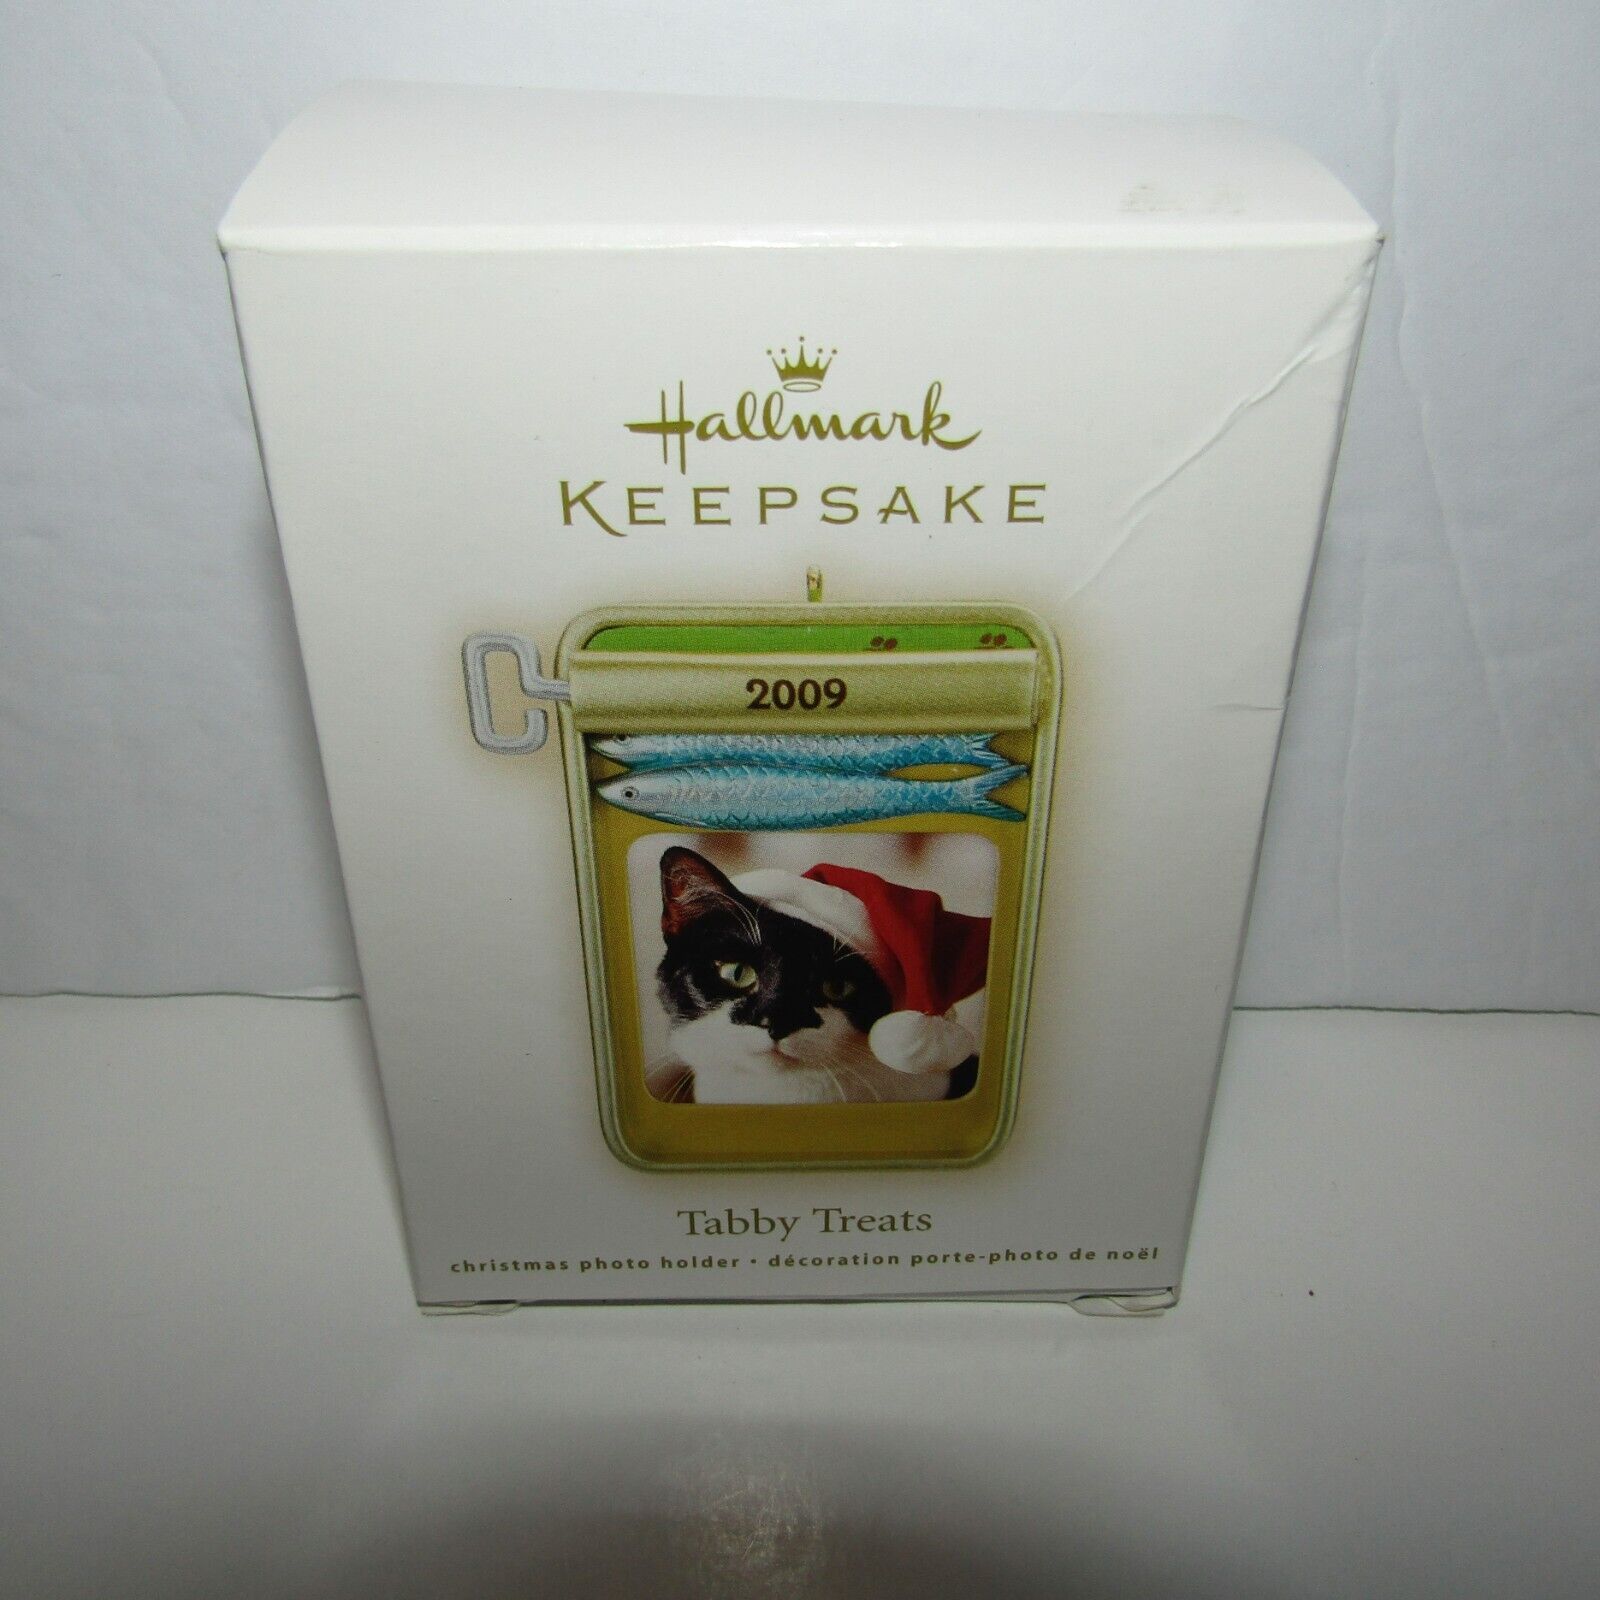 Hallmark Keepsake Tabby Treats Dated 2009 Christmas Photo Holder Ornament in Box